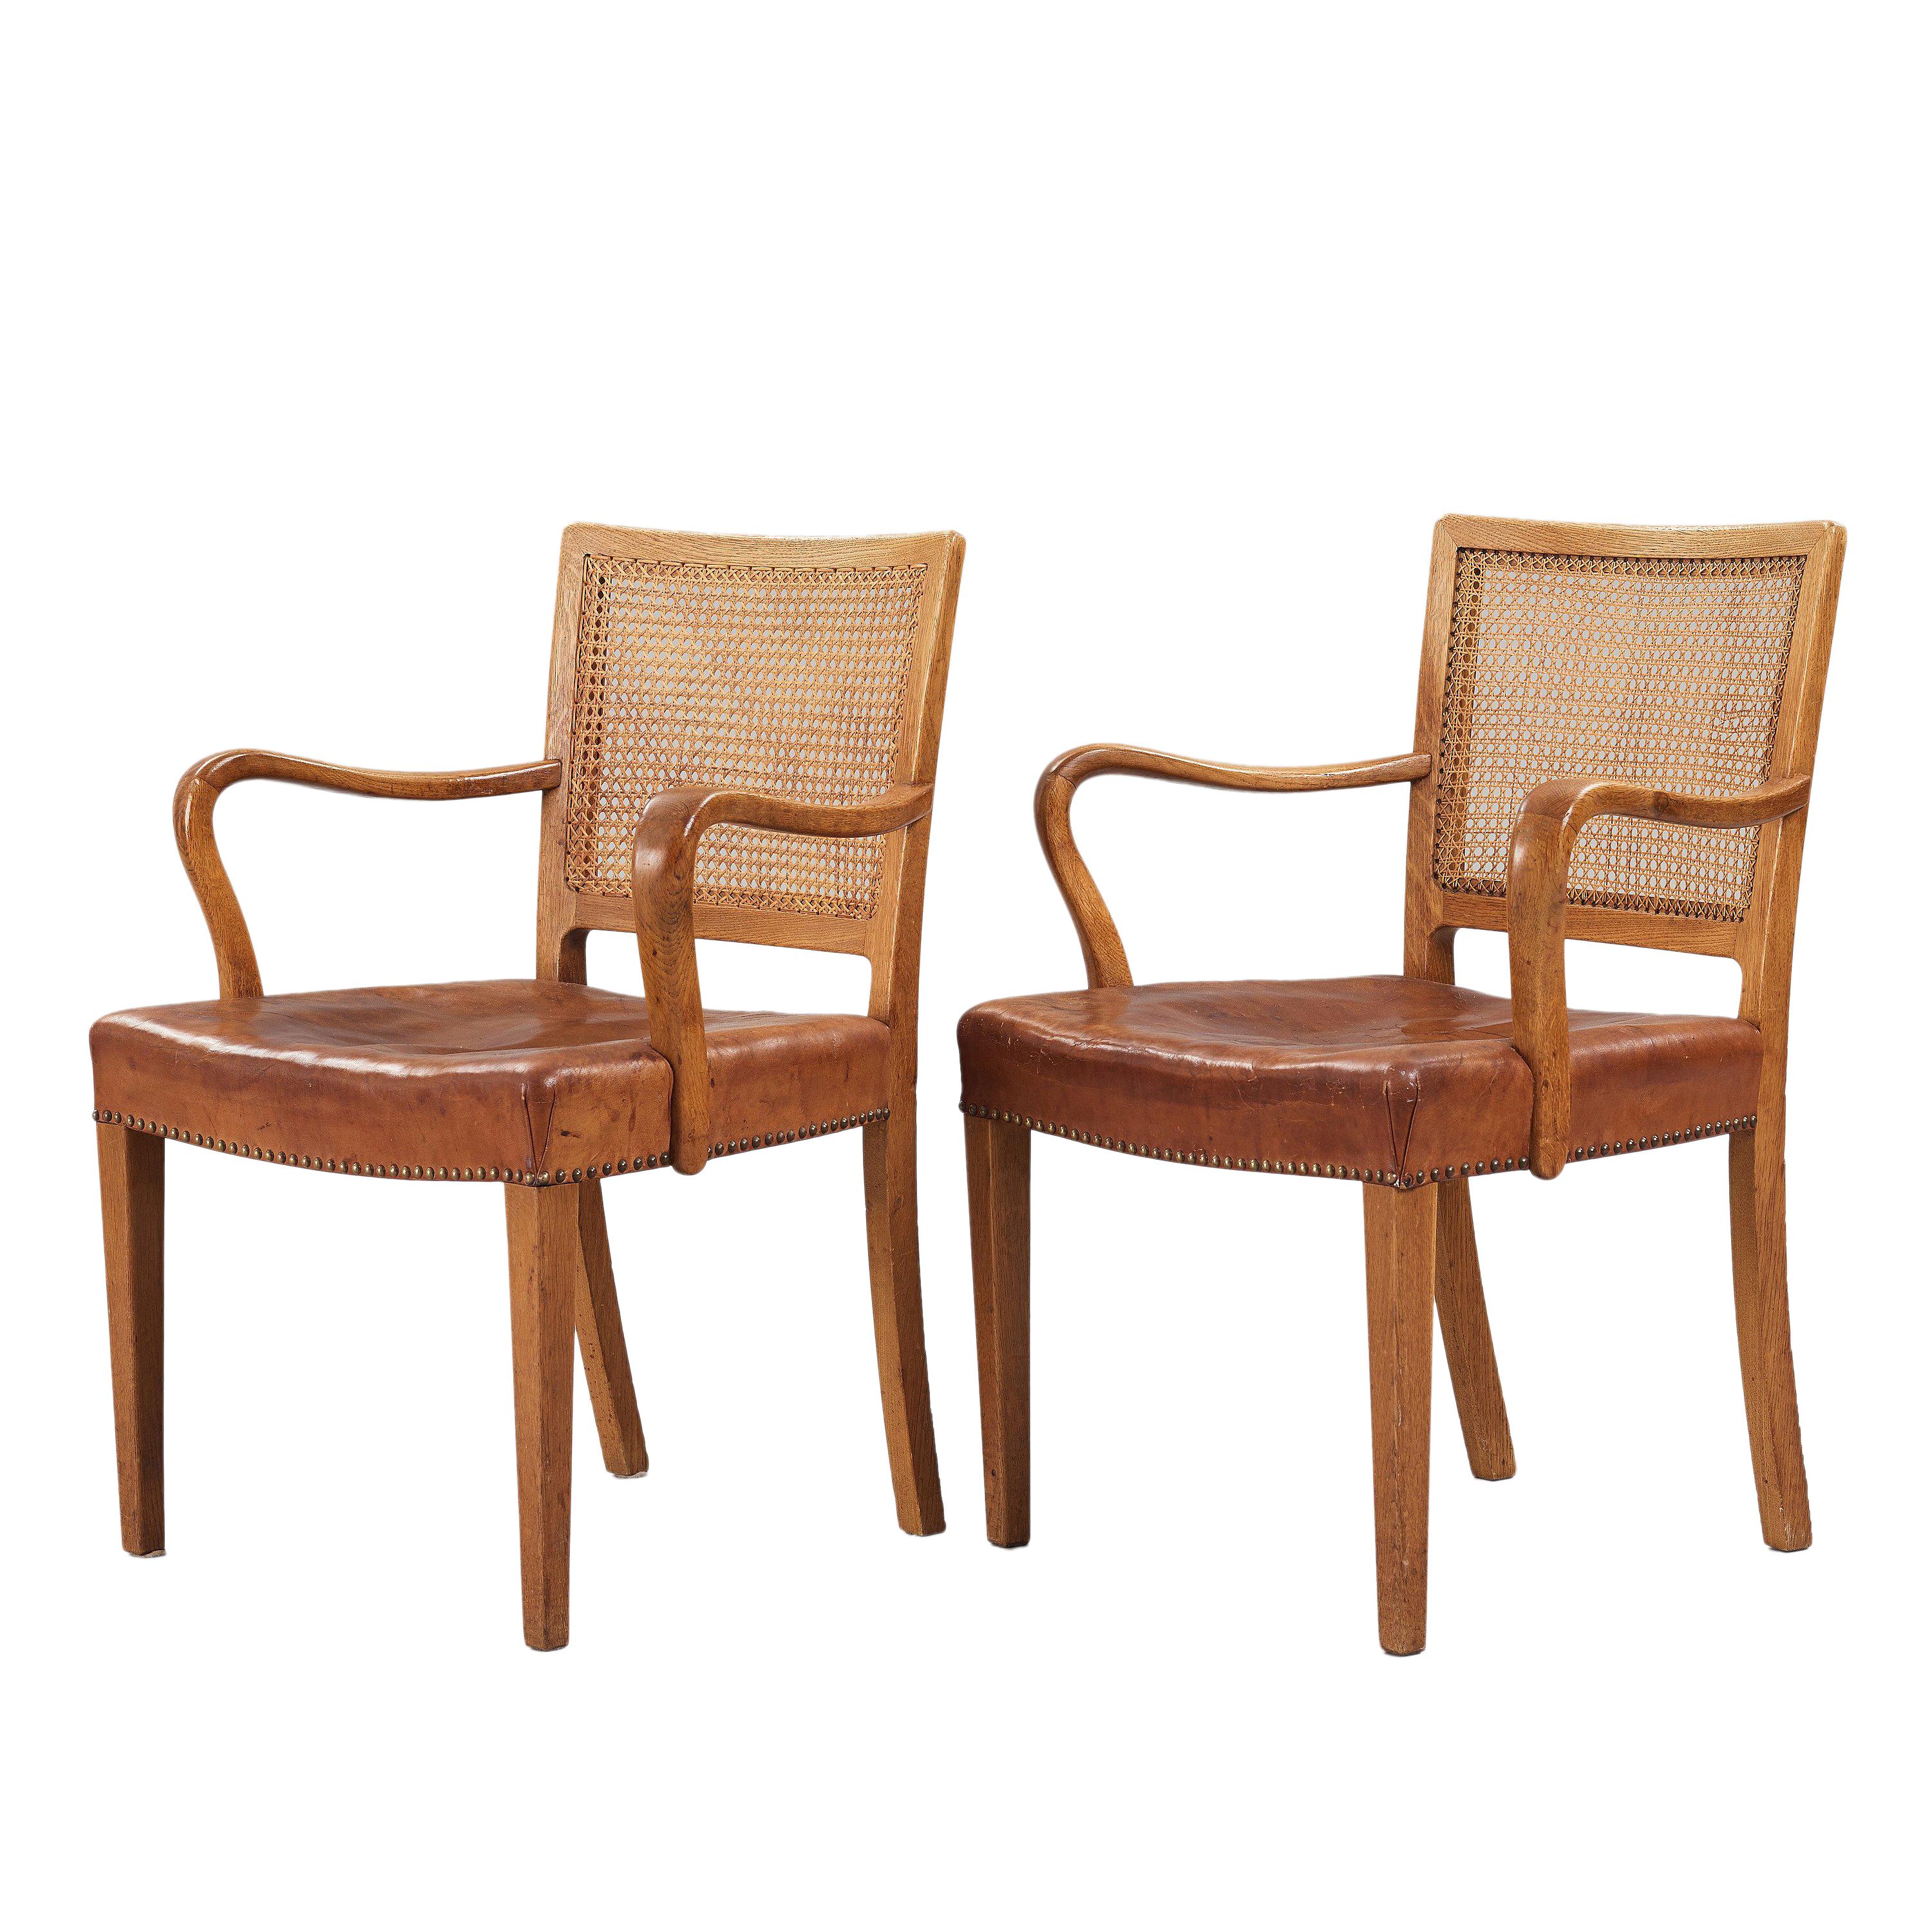 Scandinavian Modern Erik Wørts Set of 12 Dining Chairs in Oak, Cane and Niger Leather, 1945